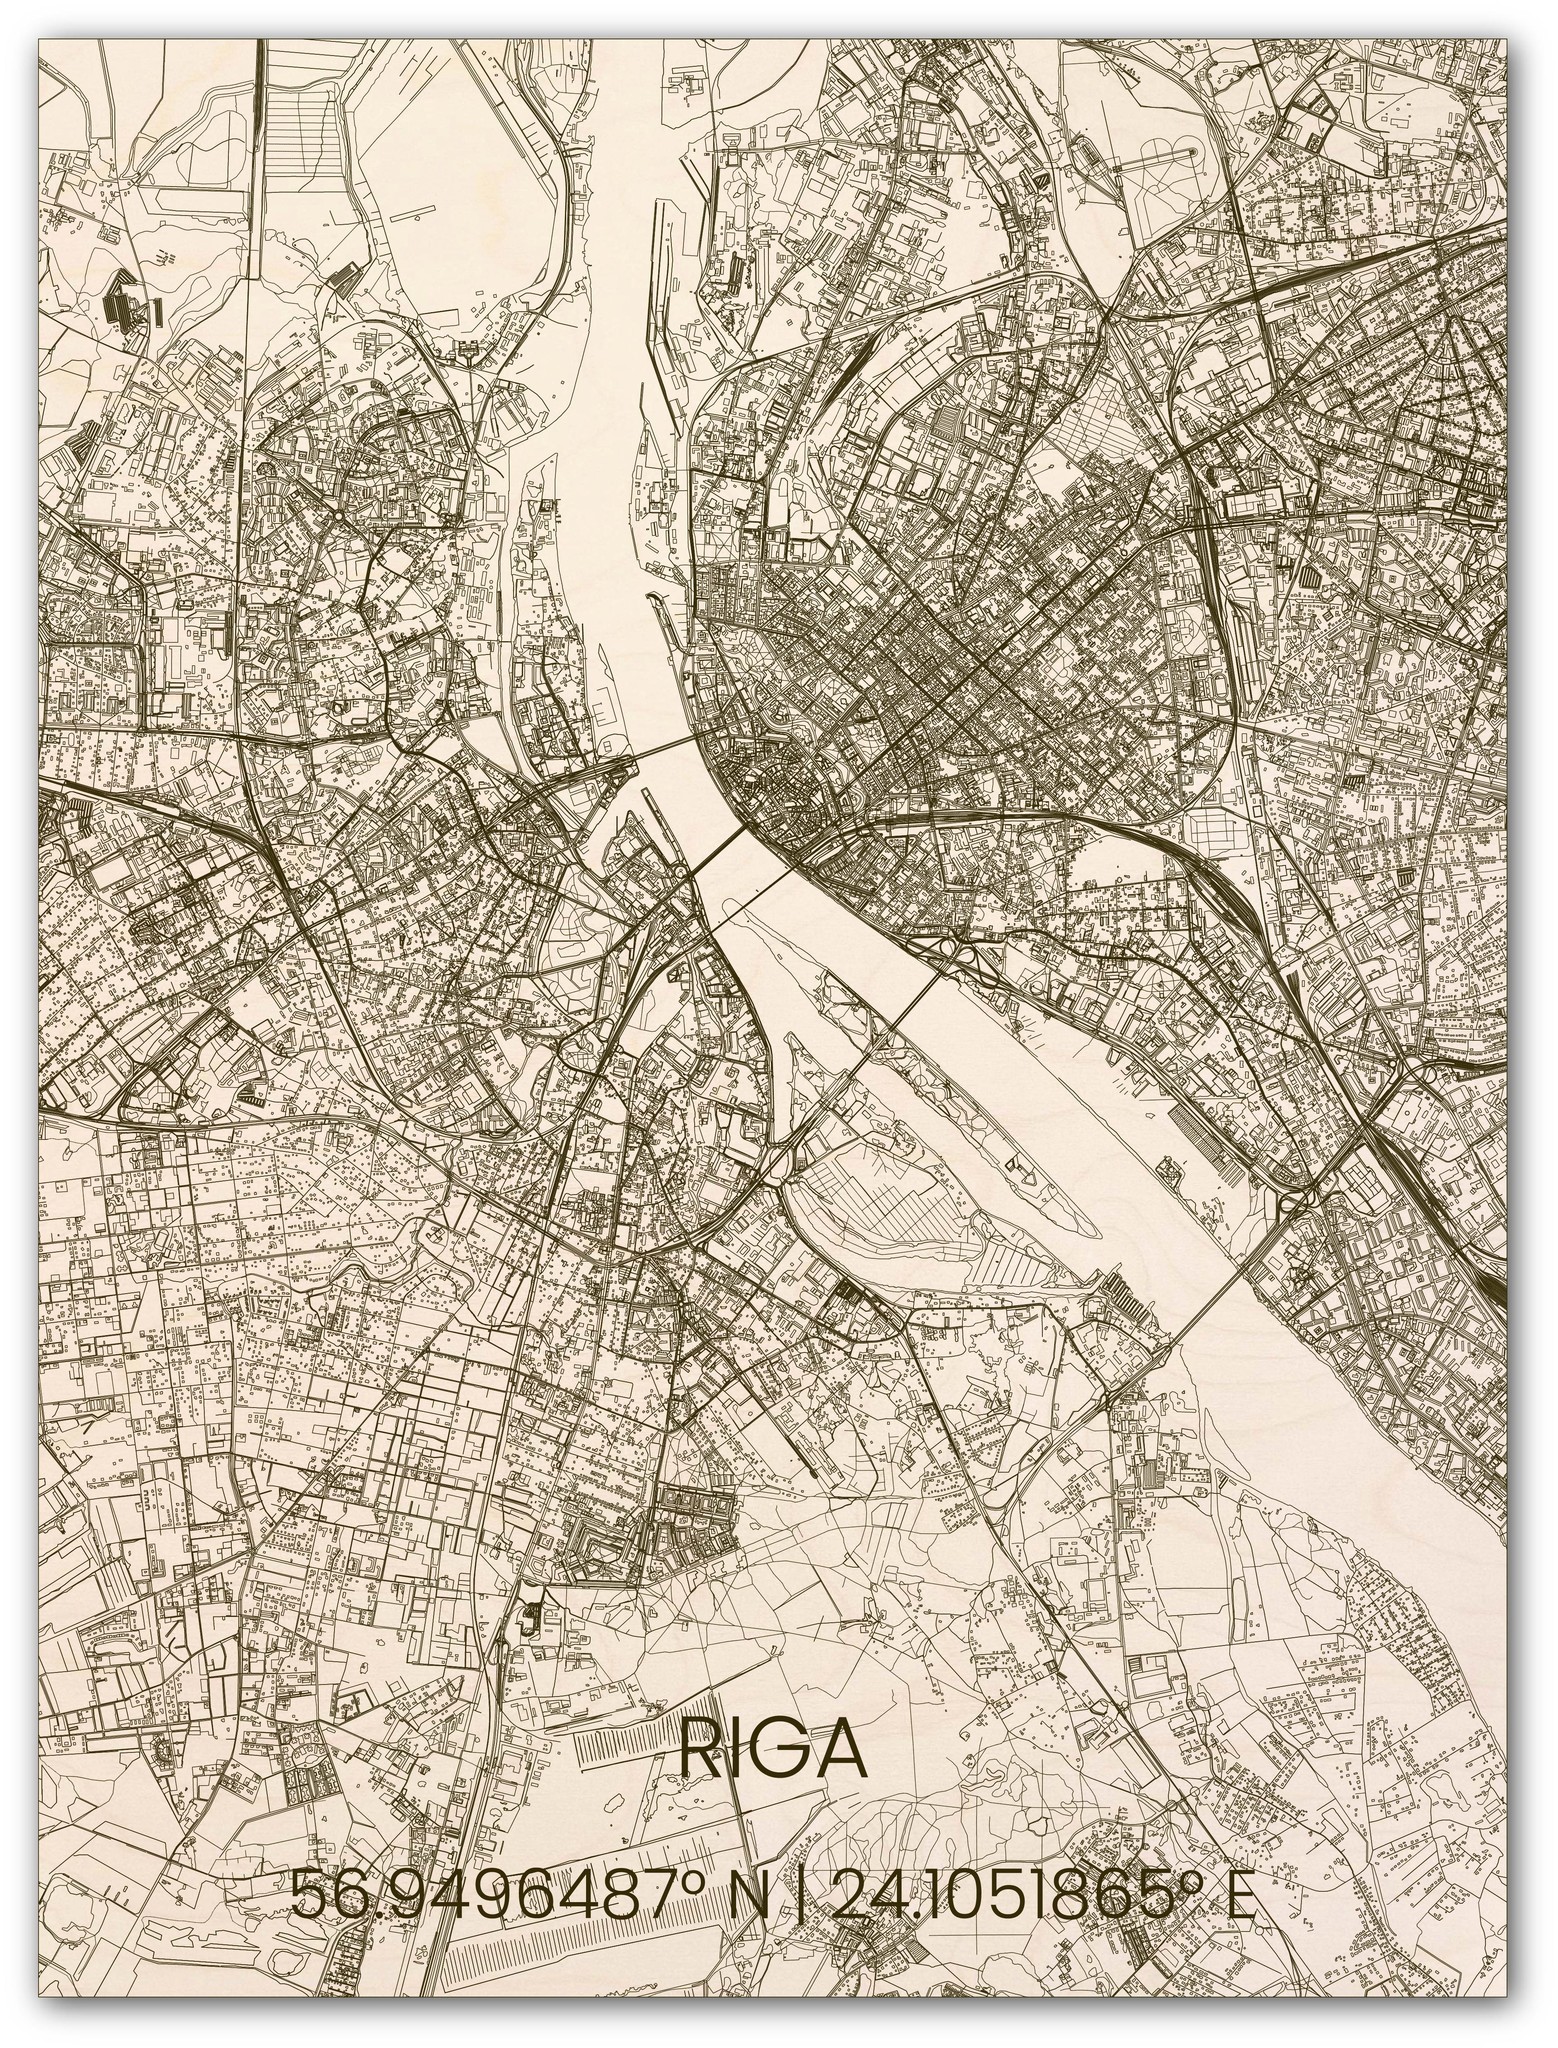 Houten stadsplattegrond Riga-1